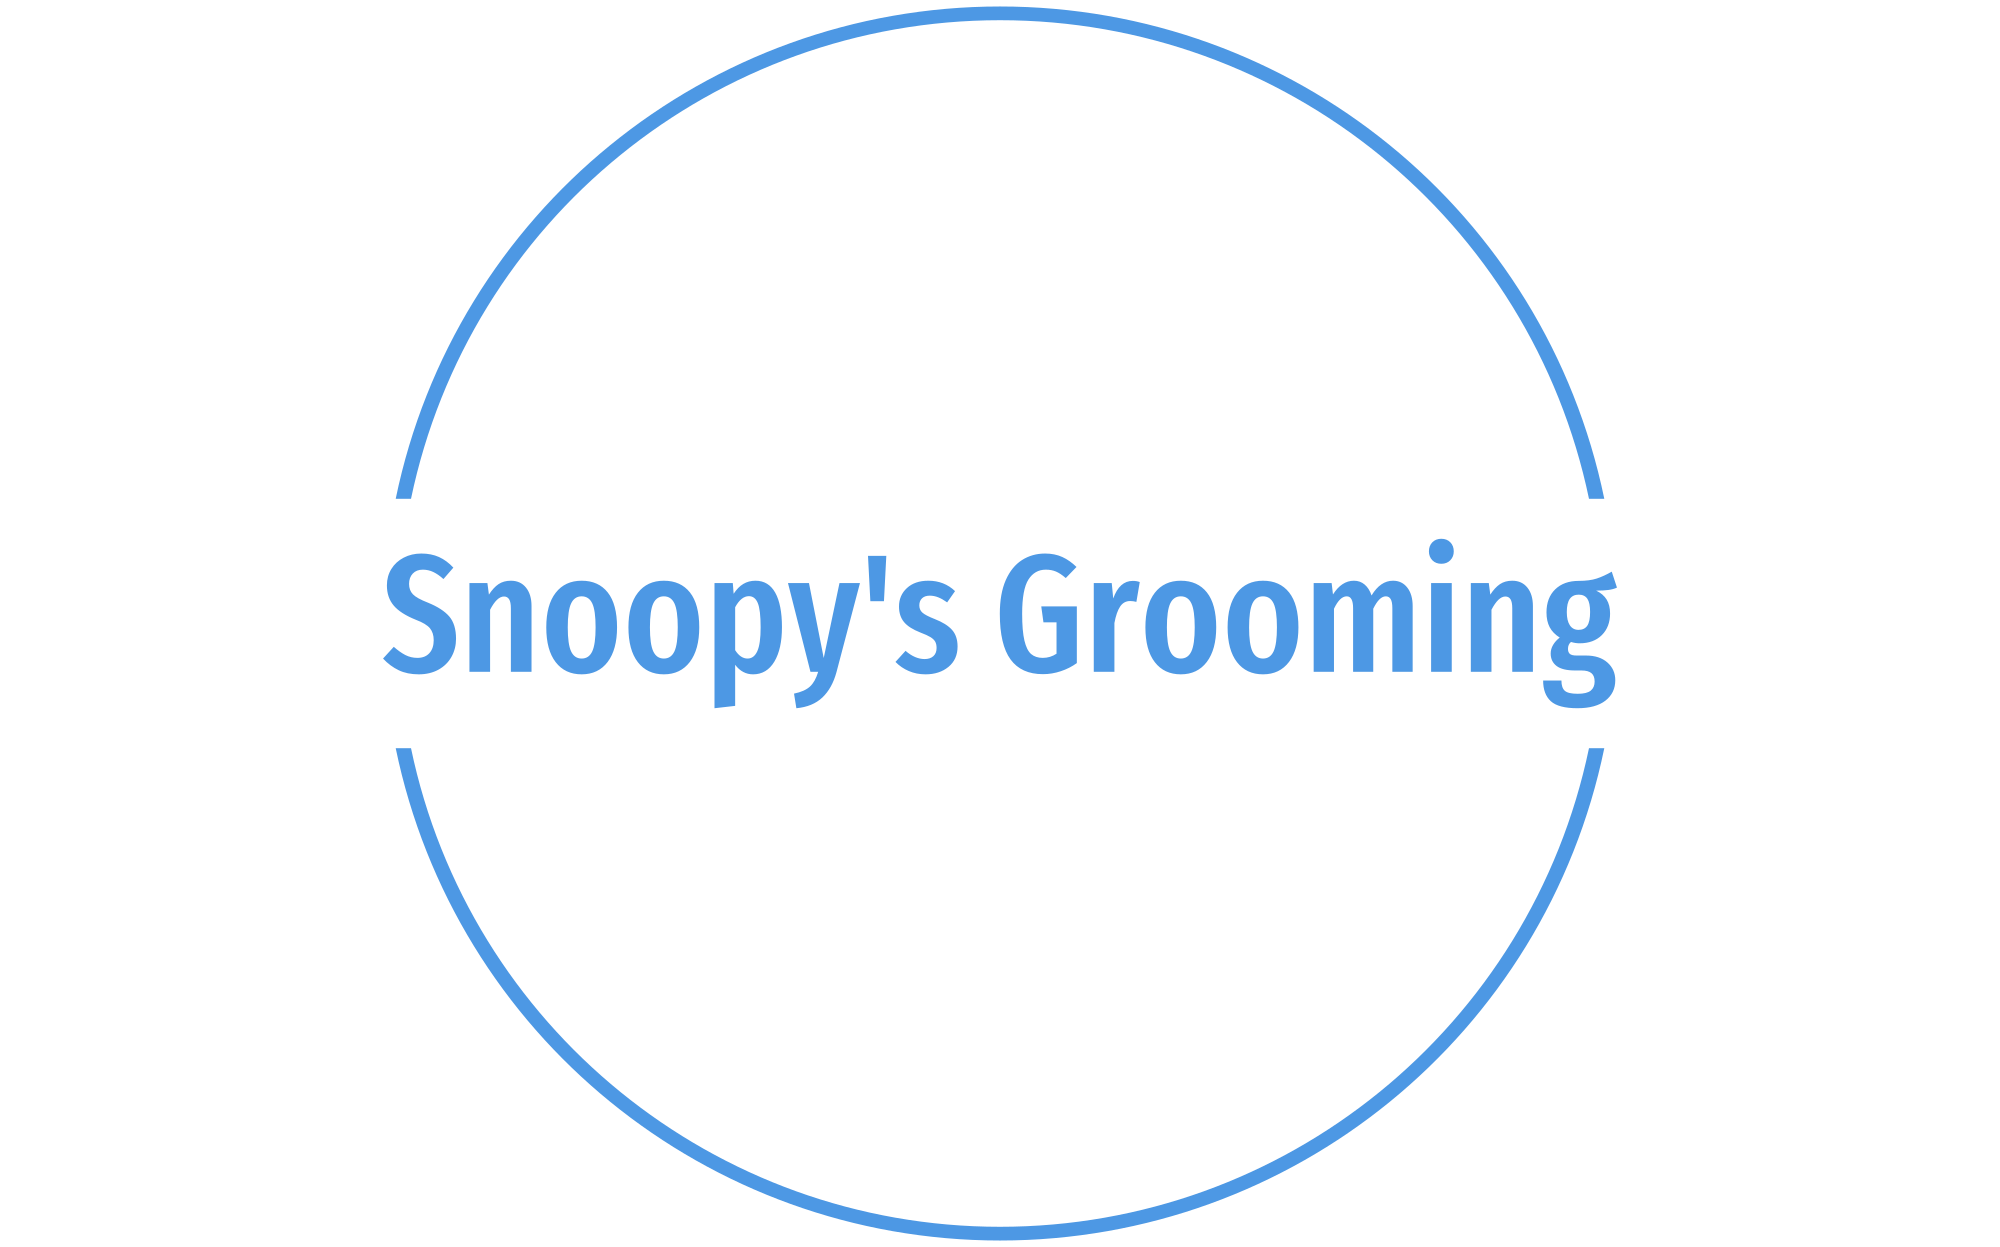 Snoopy's Grooming